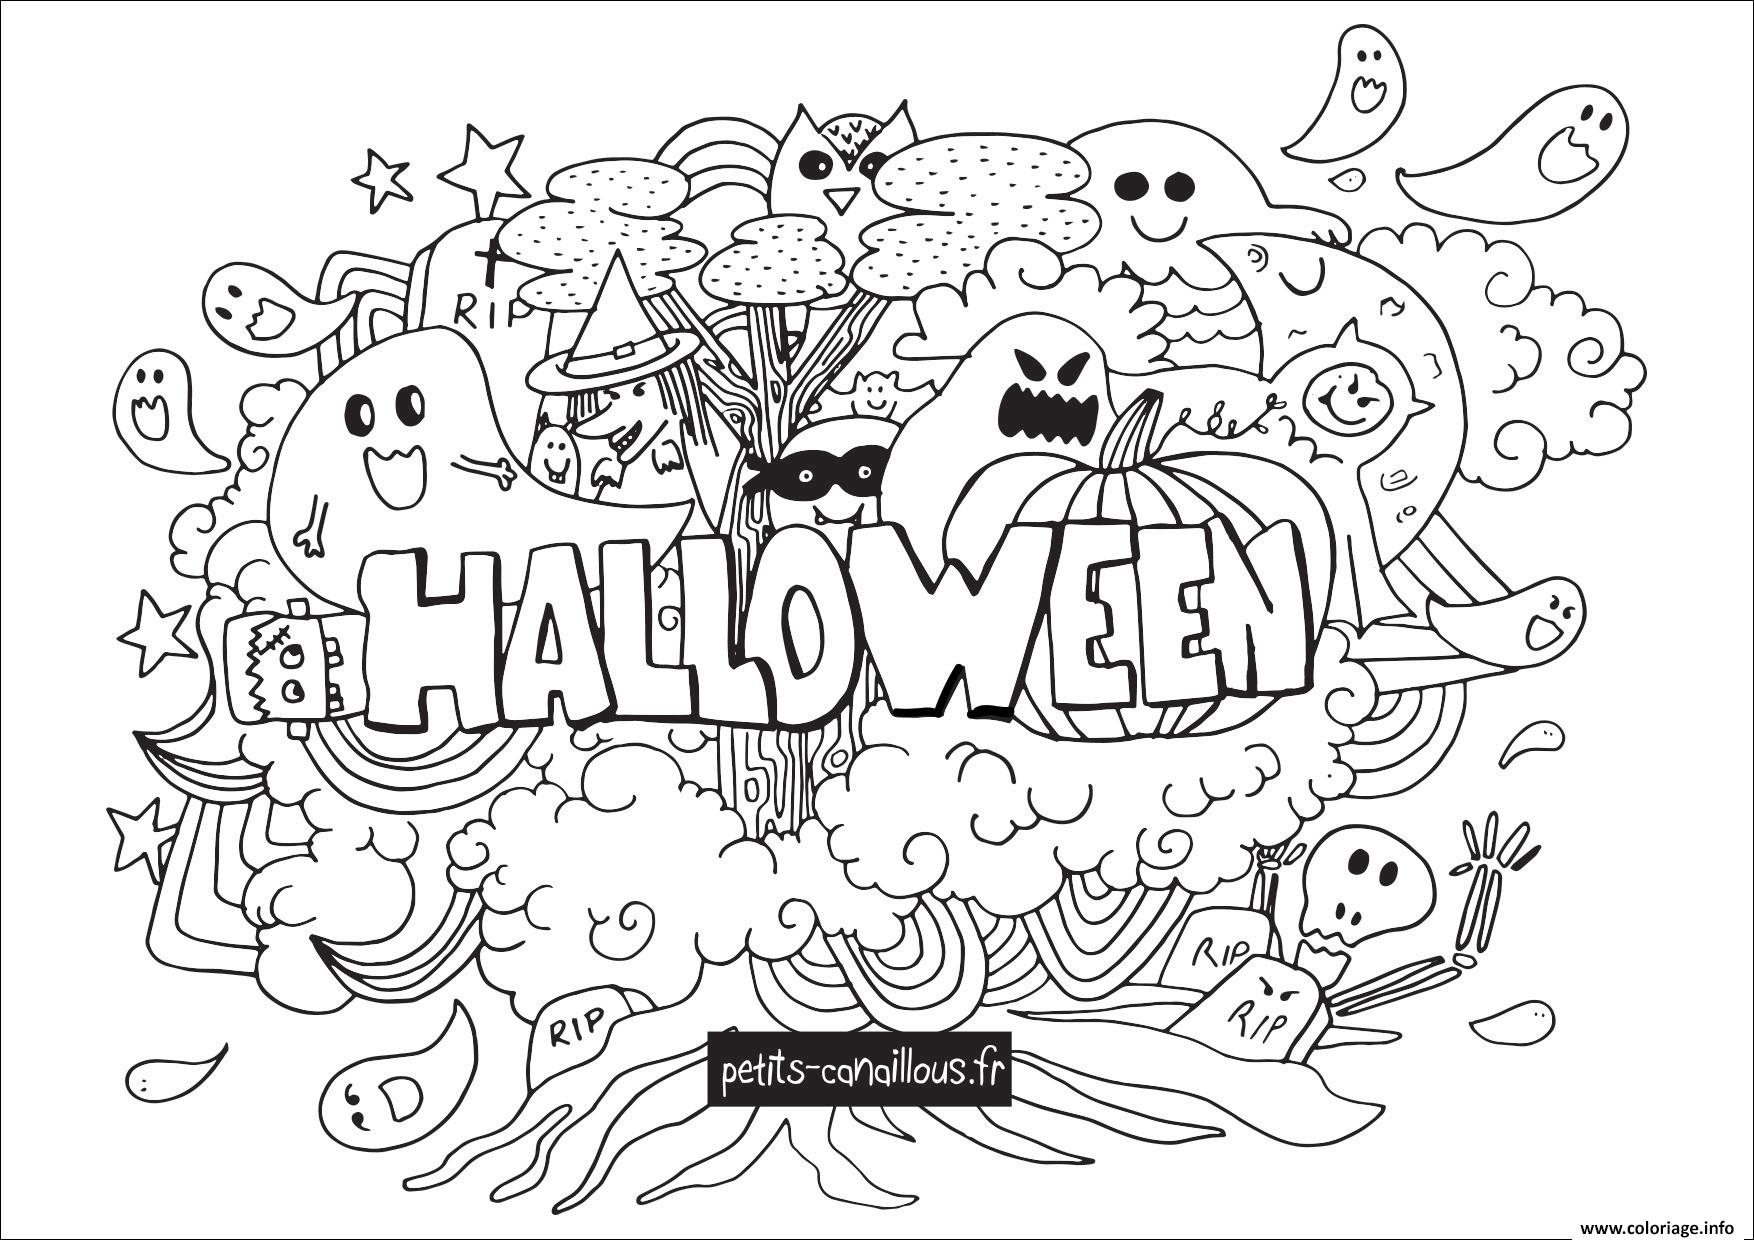 Coloriage halloween doodle - JeColorie.com